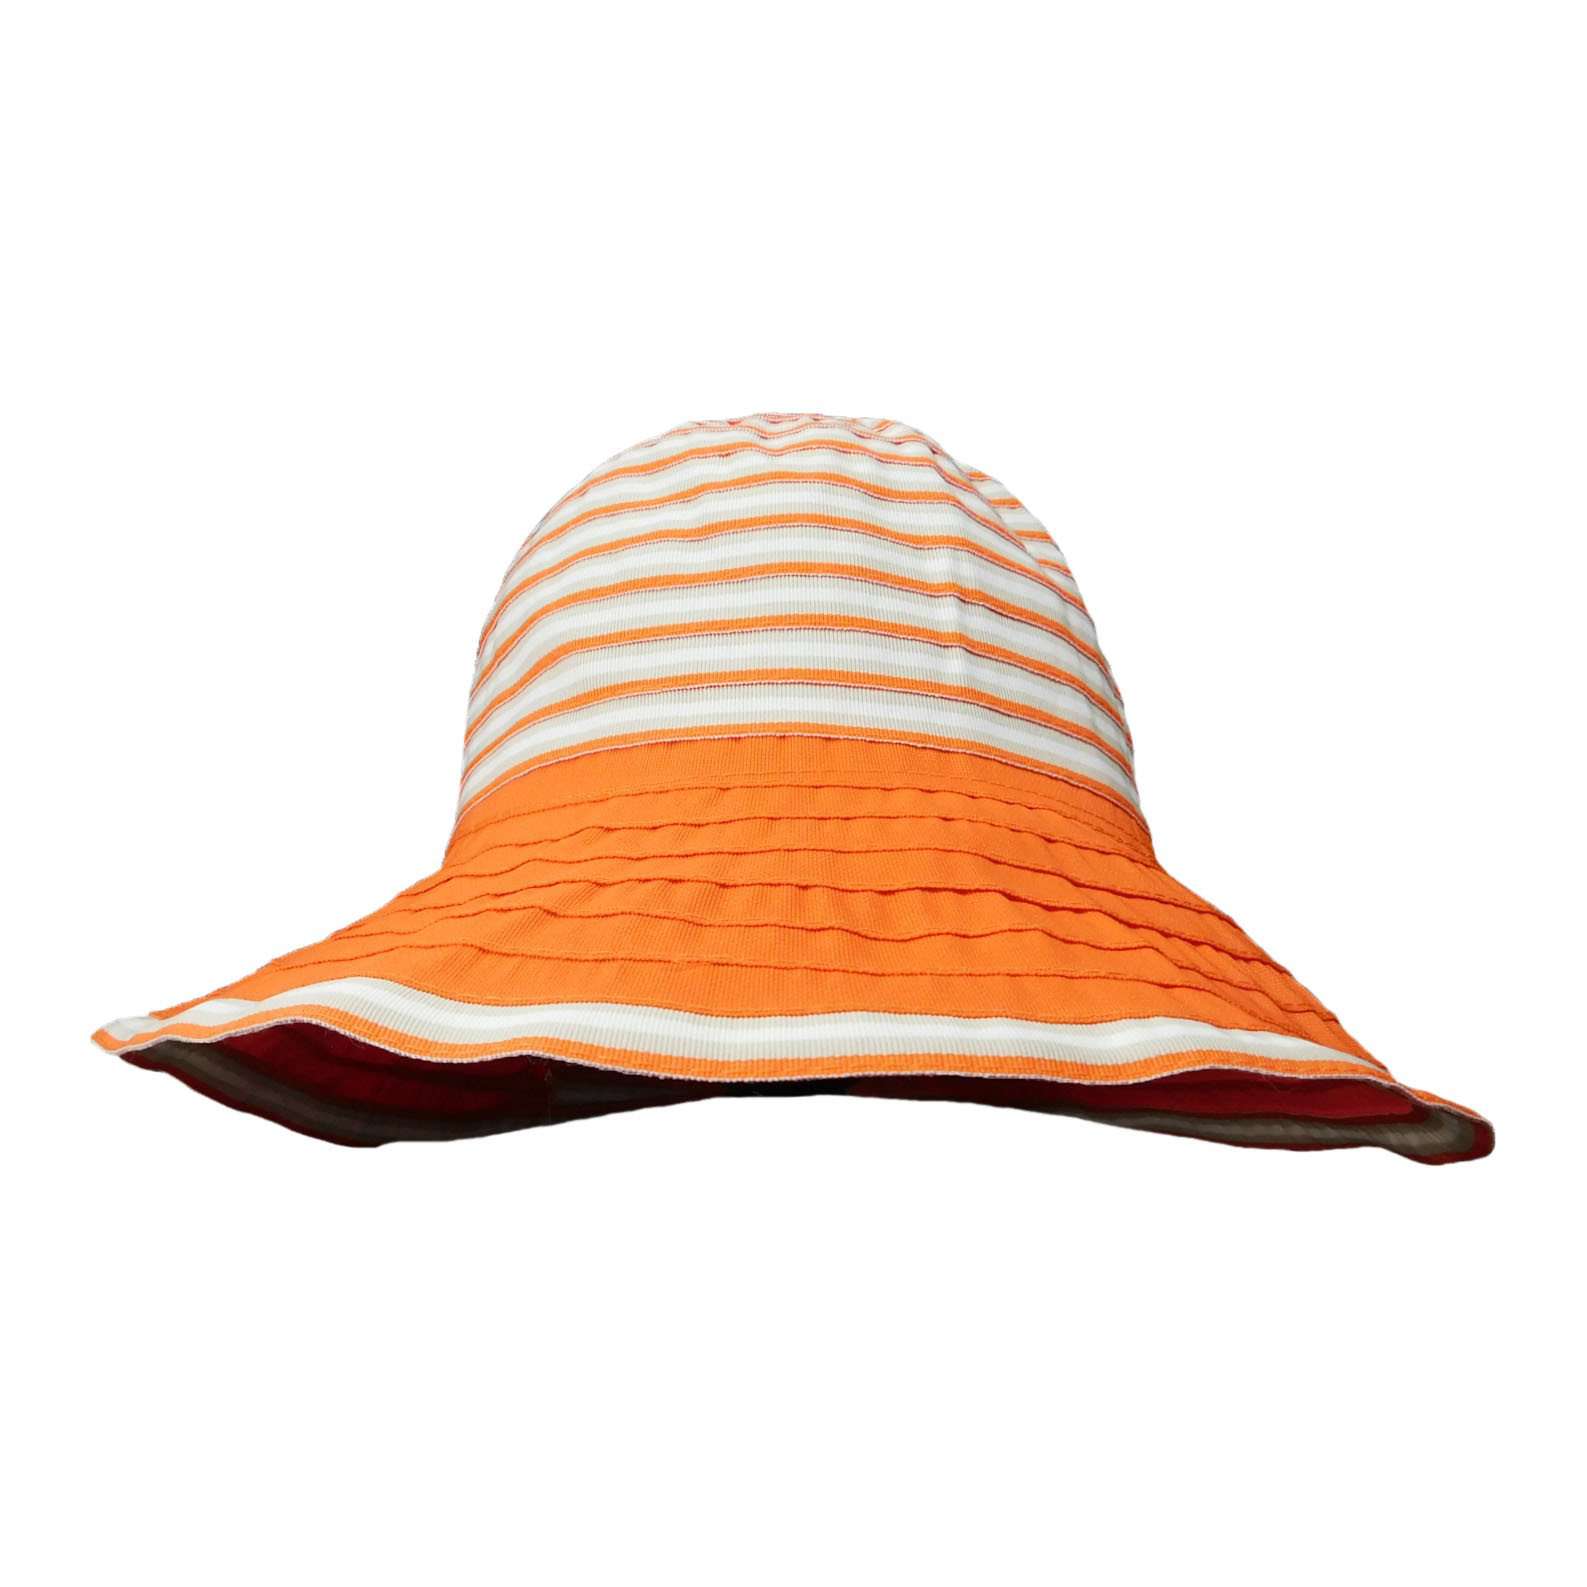 Striped Orange and White Shapeable Brim Summer Hat, Cloche - SetarTrading Hats 